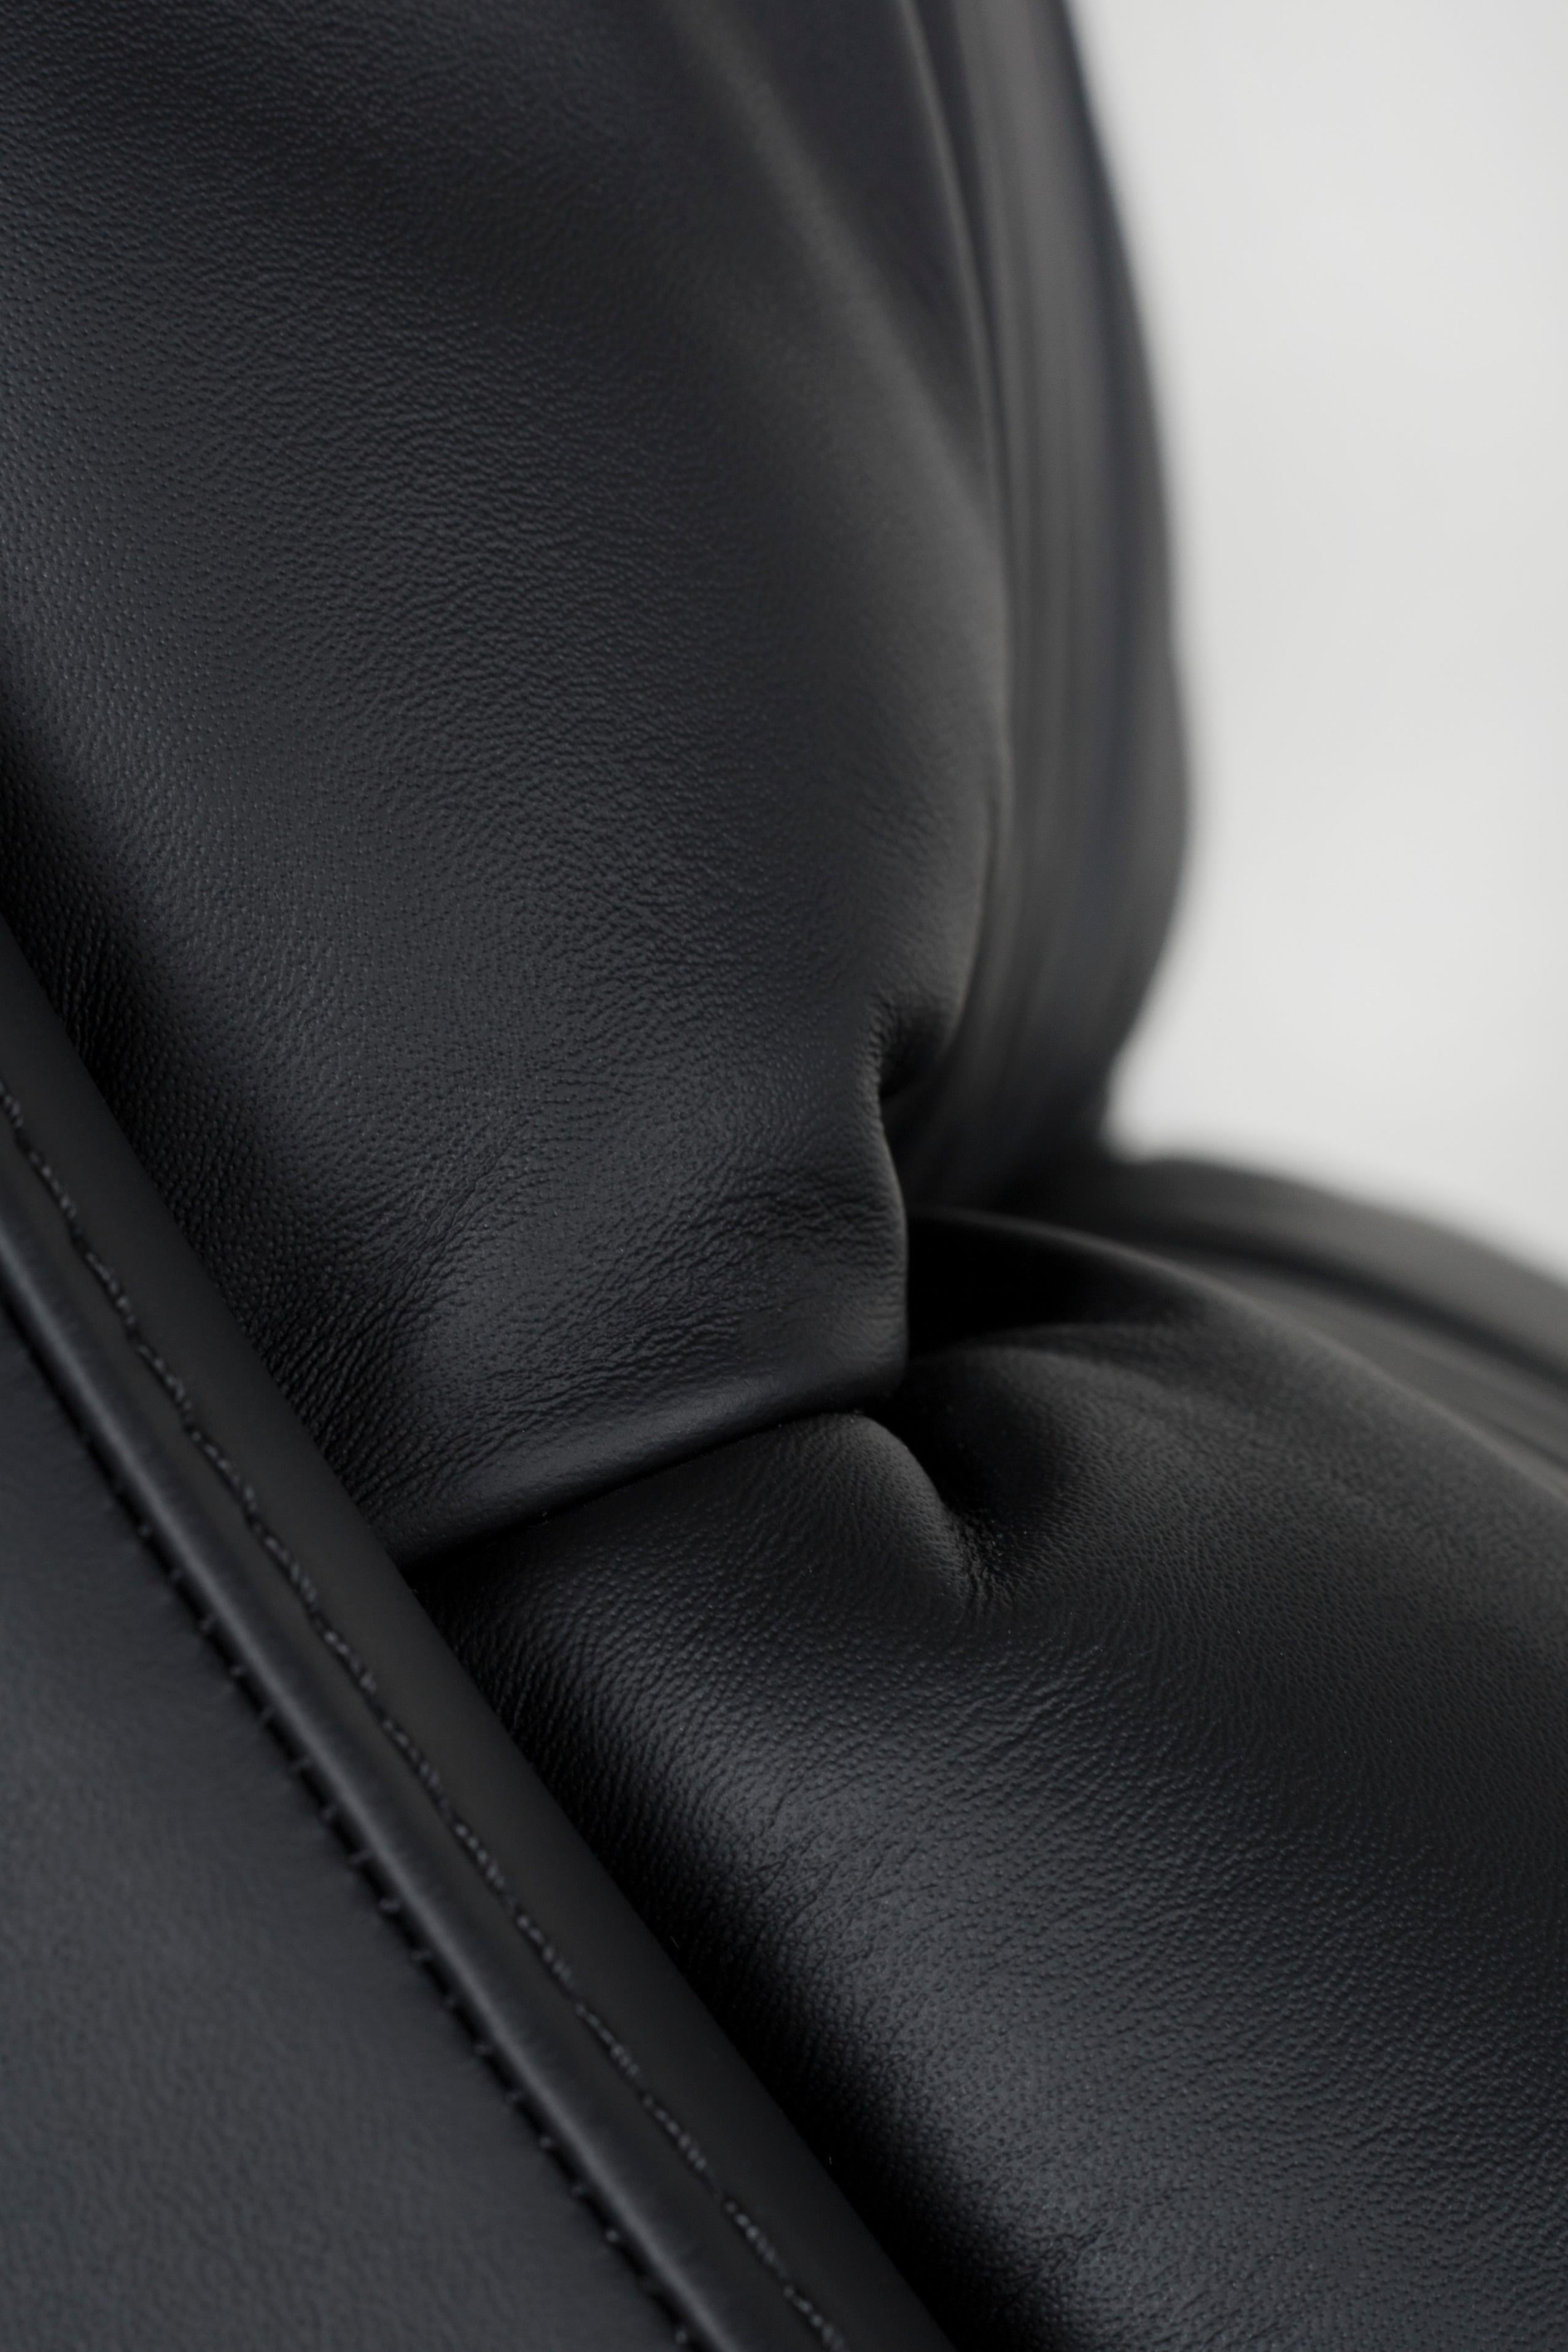 Modern Capelinhos Lounge Chair, Swivel, Black, Handmade Portugal by Greenapple For Sale 2